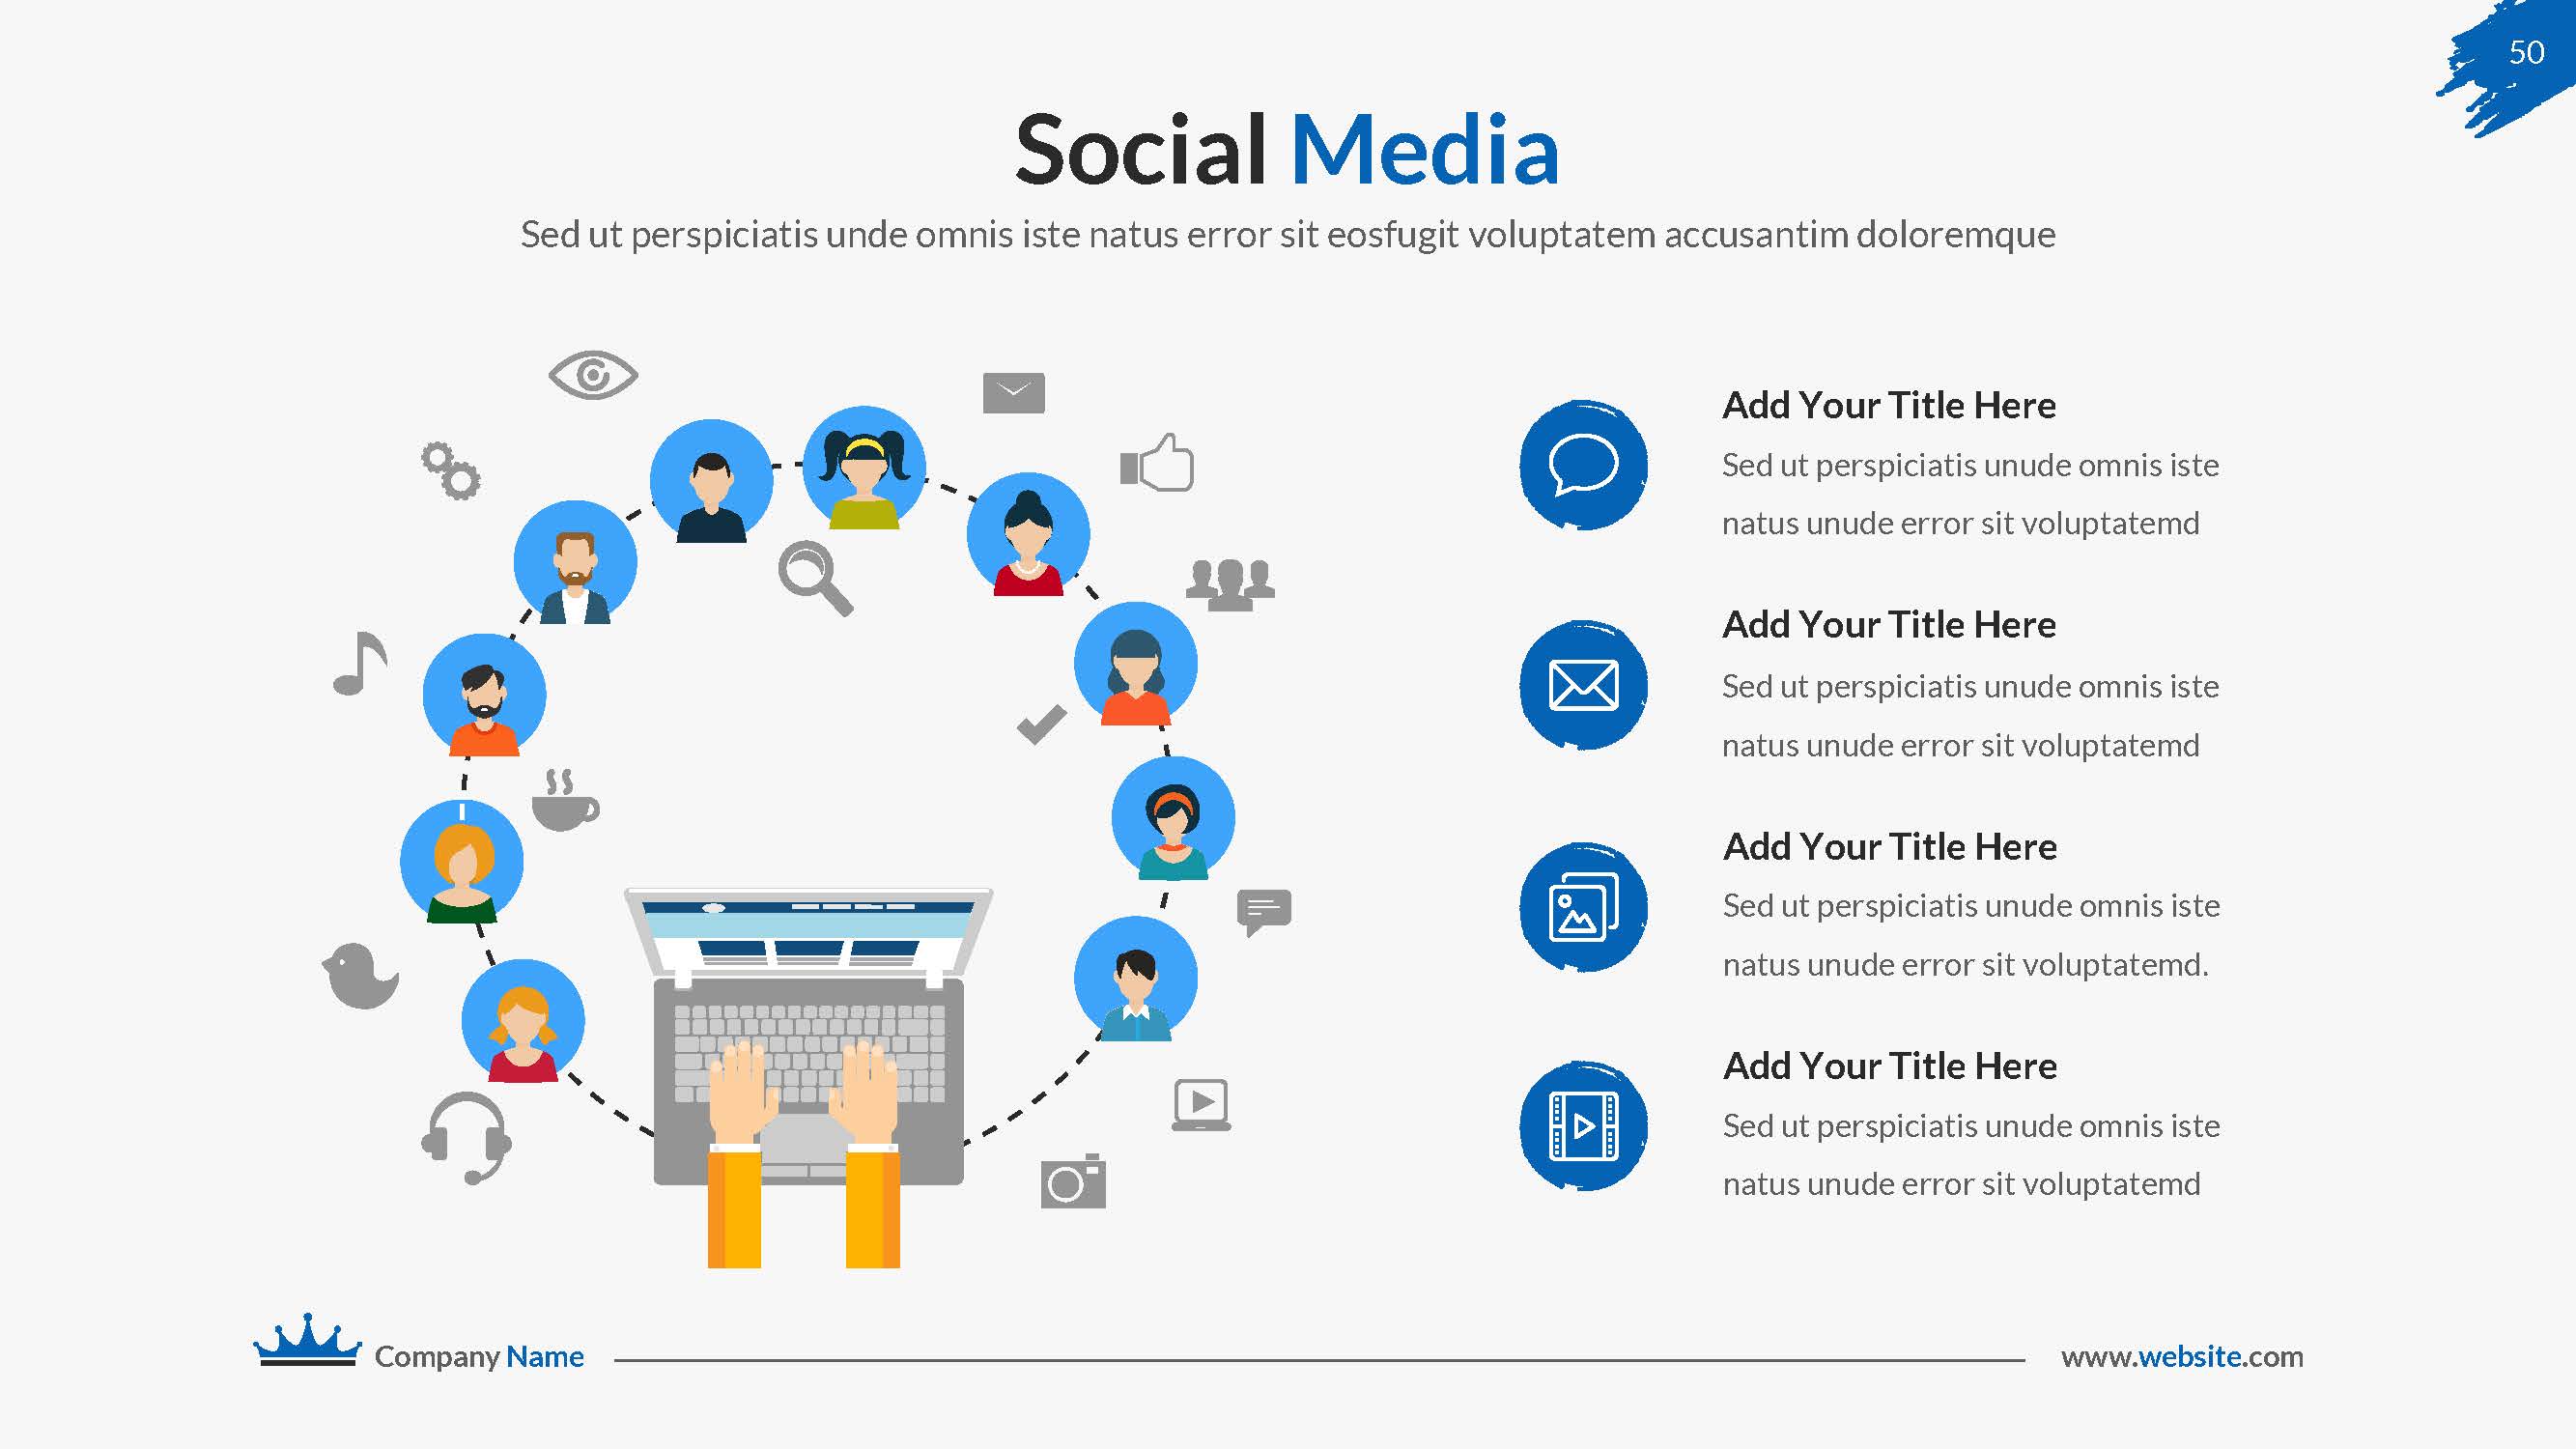 Social Media Marketing Google Slides Pitch Deck by Spriteit GraphicRiver